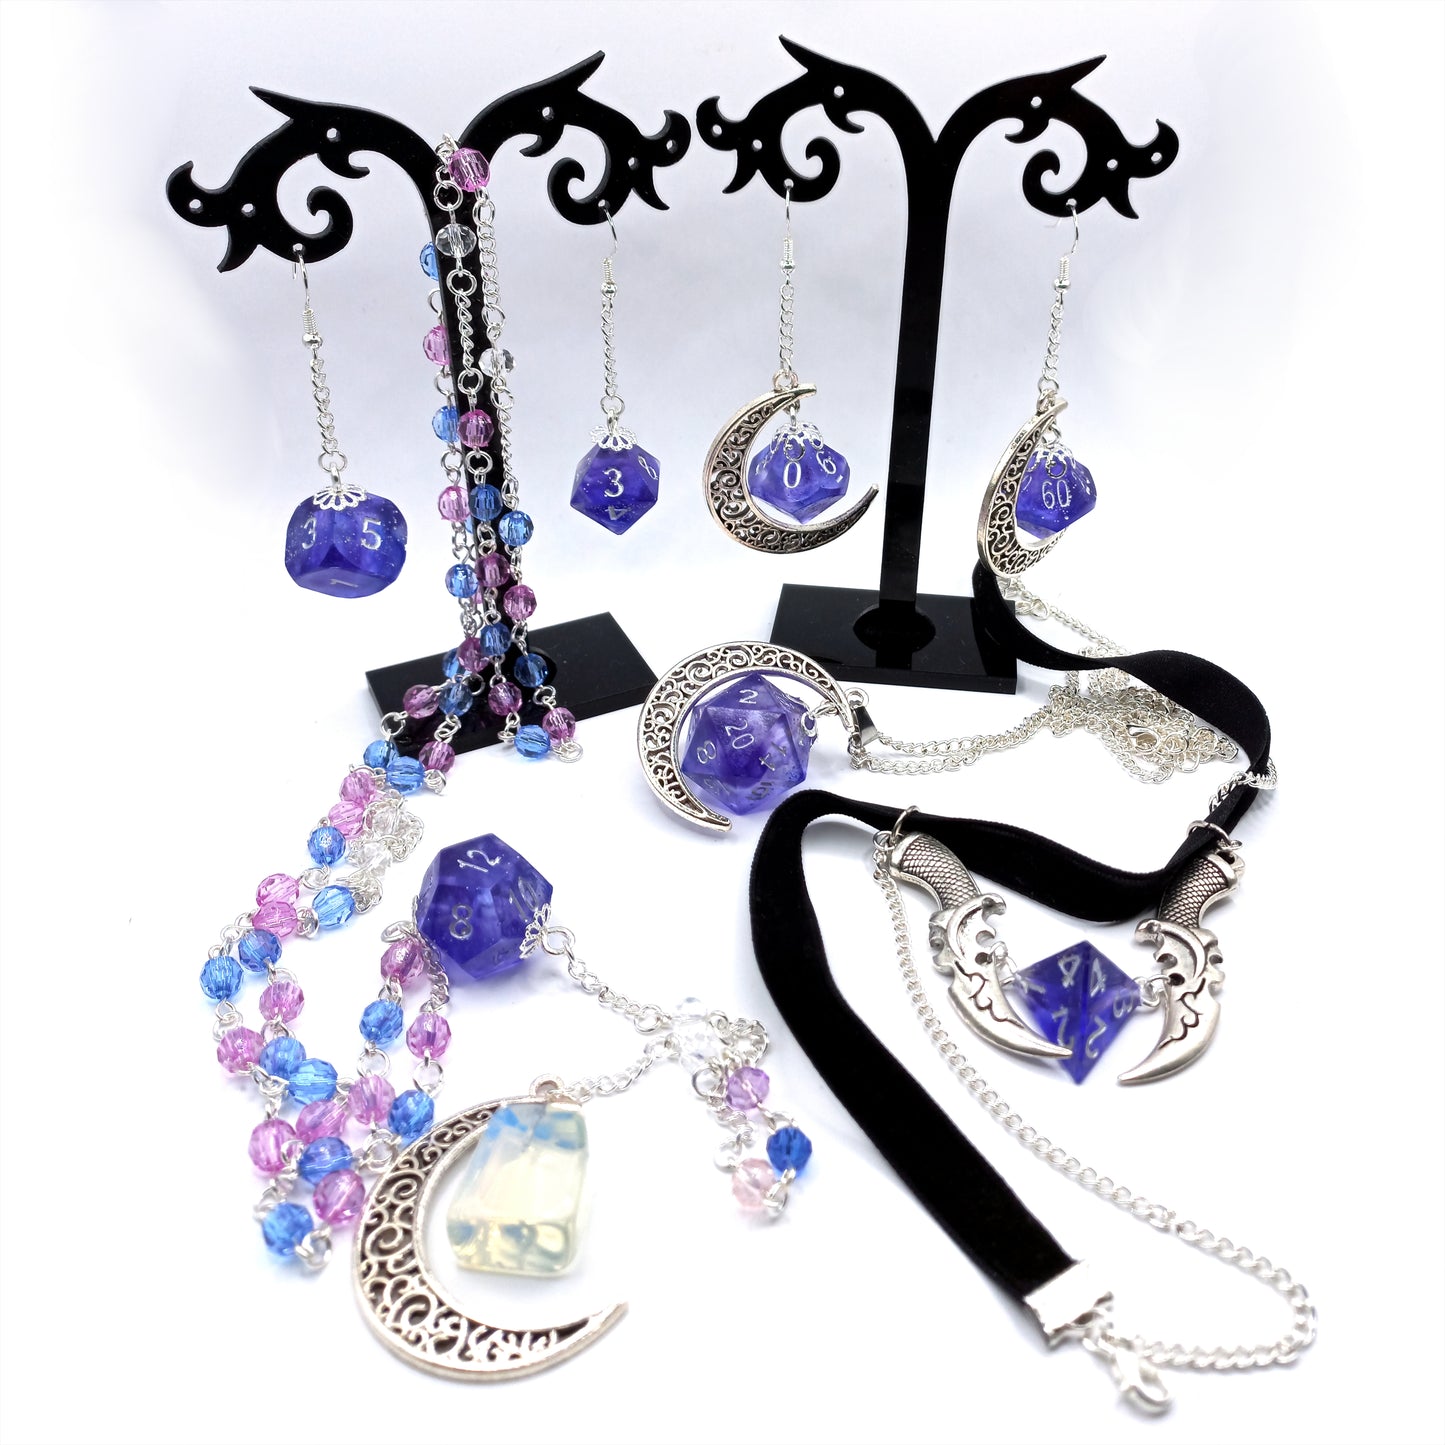 DnD Dice Jewellery, Handmade Dice Jewellery, Handmade Dice, Stardust Collection, Dice Necklace, Dice Earrings, Dice Choker, Dice Rosary Beads